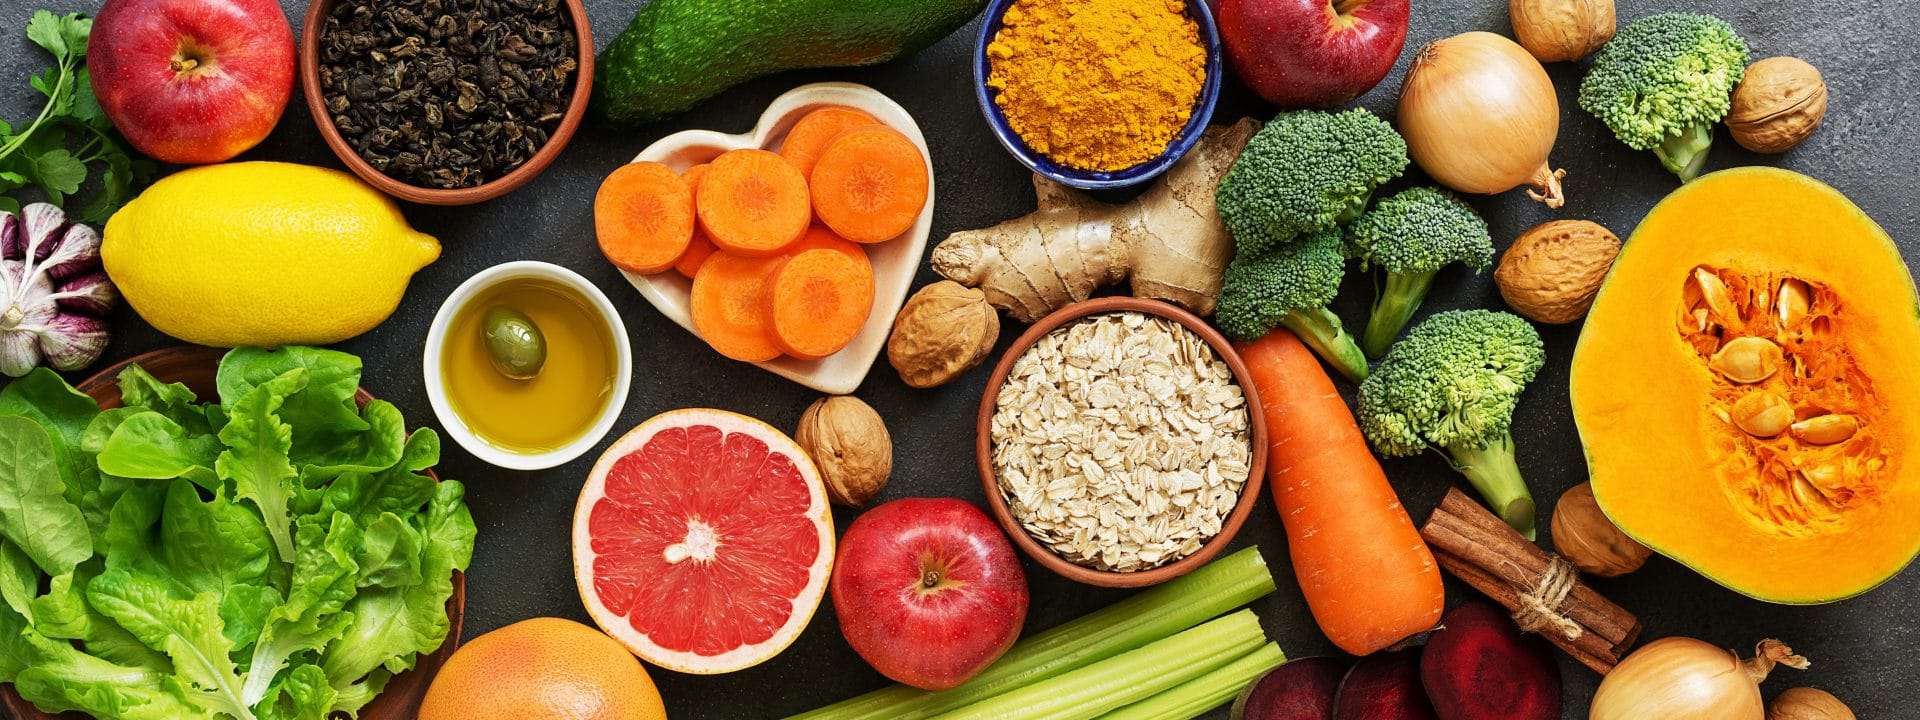 healthy foods for elderly